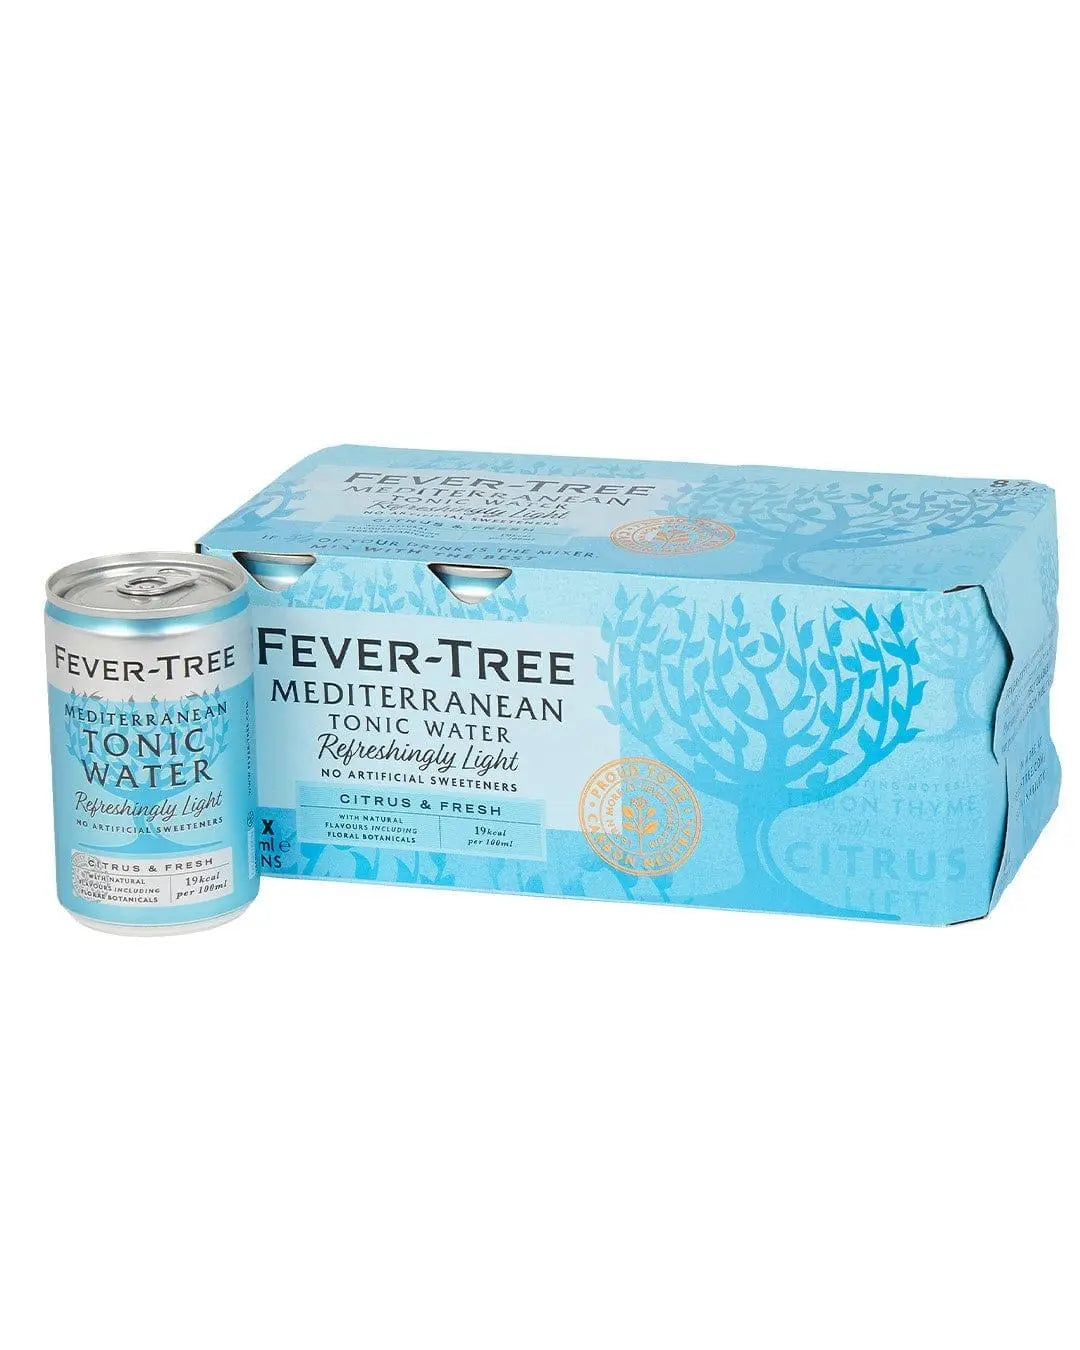 Fever-Tree Refreshingly Light Mediterranean Tonic Water Fridge Pack, 8 x 150 ml Tonics